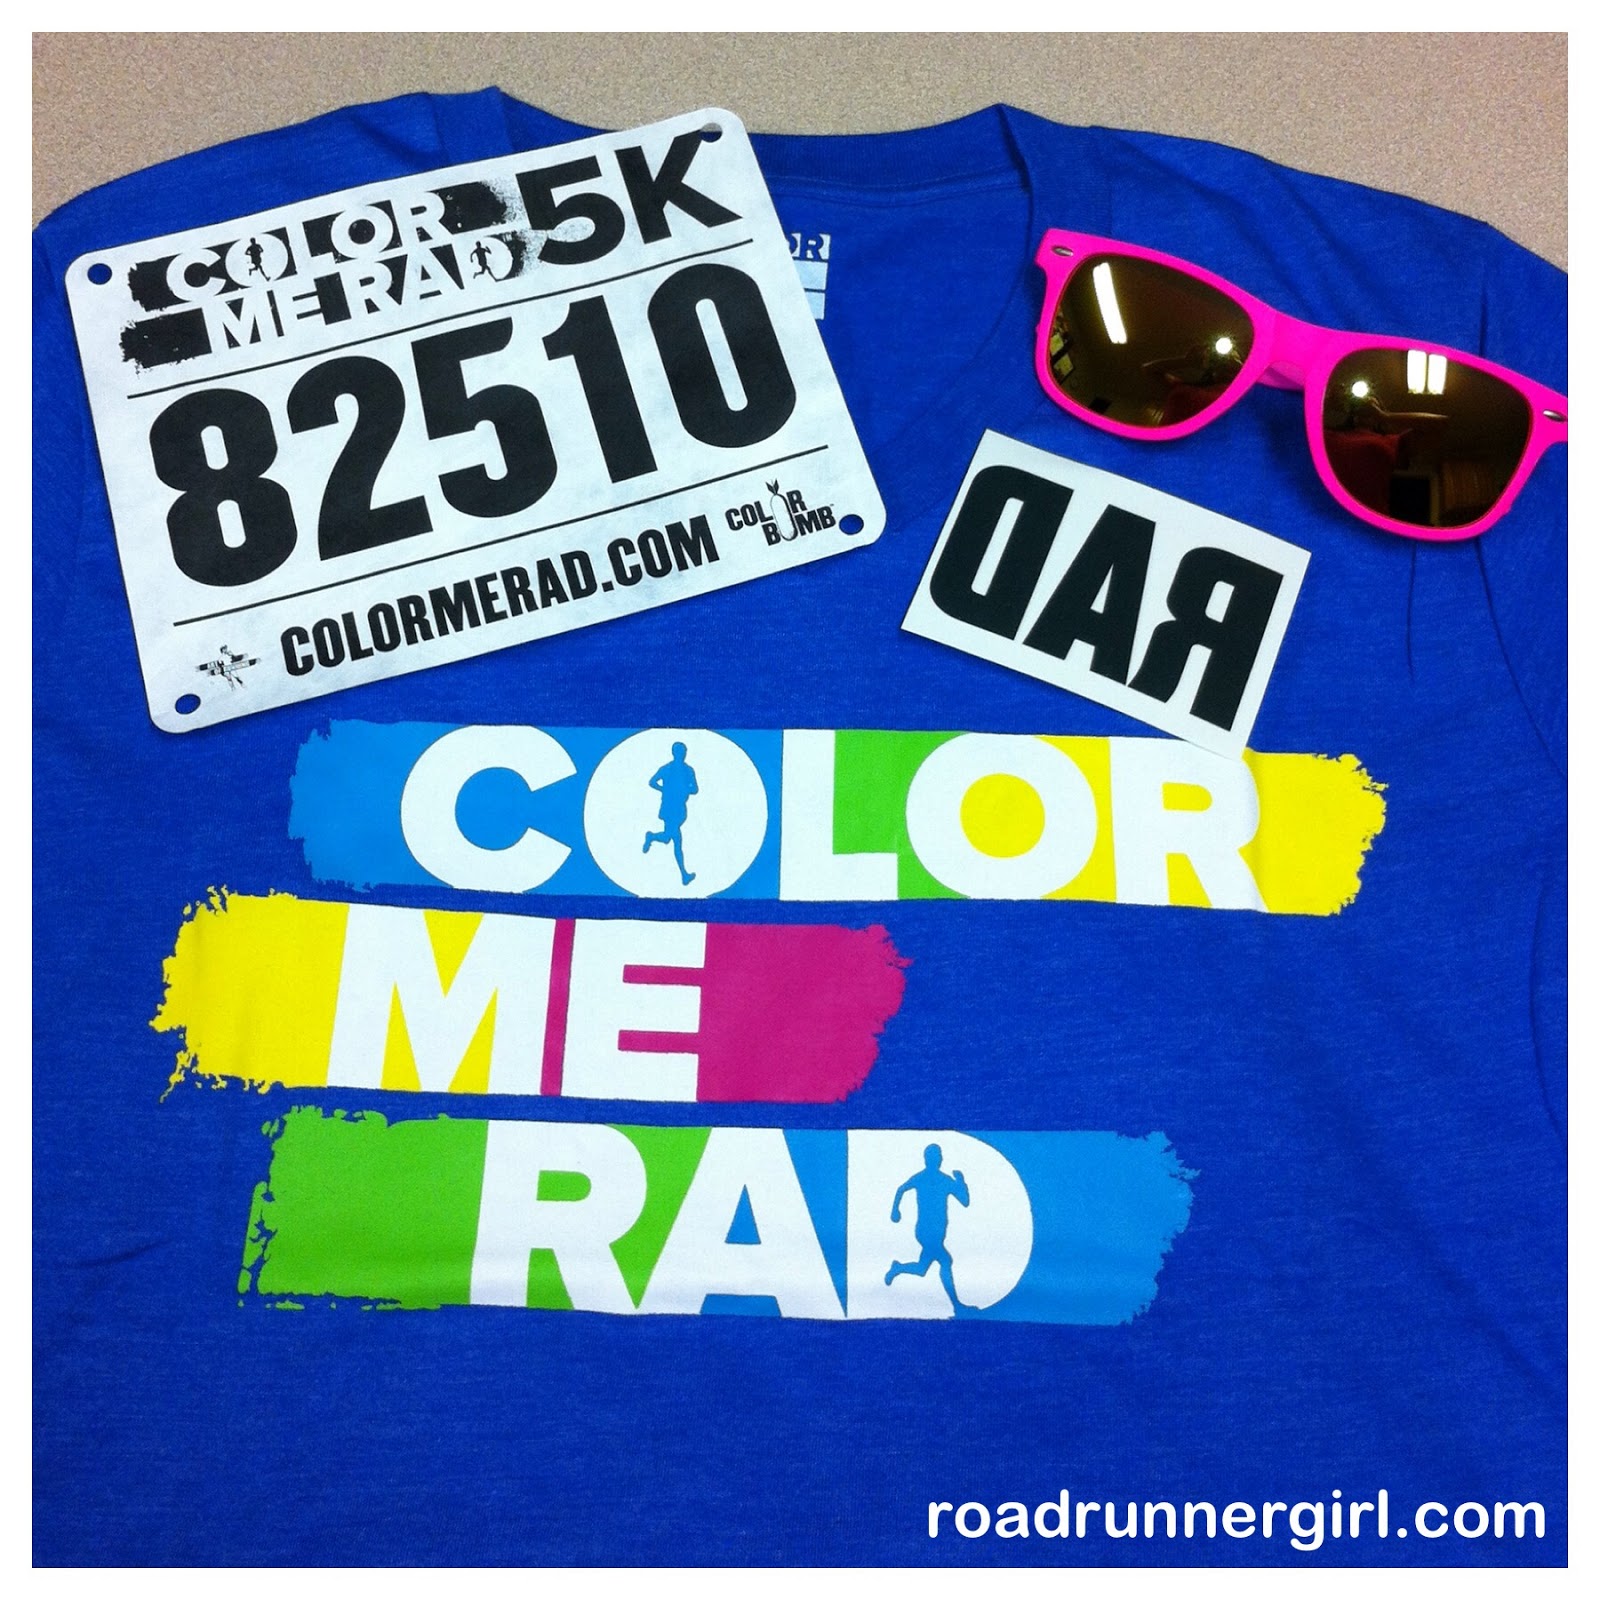 Road Runner Girl Color Me Rad 5k